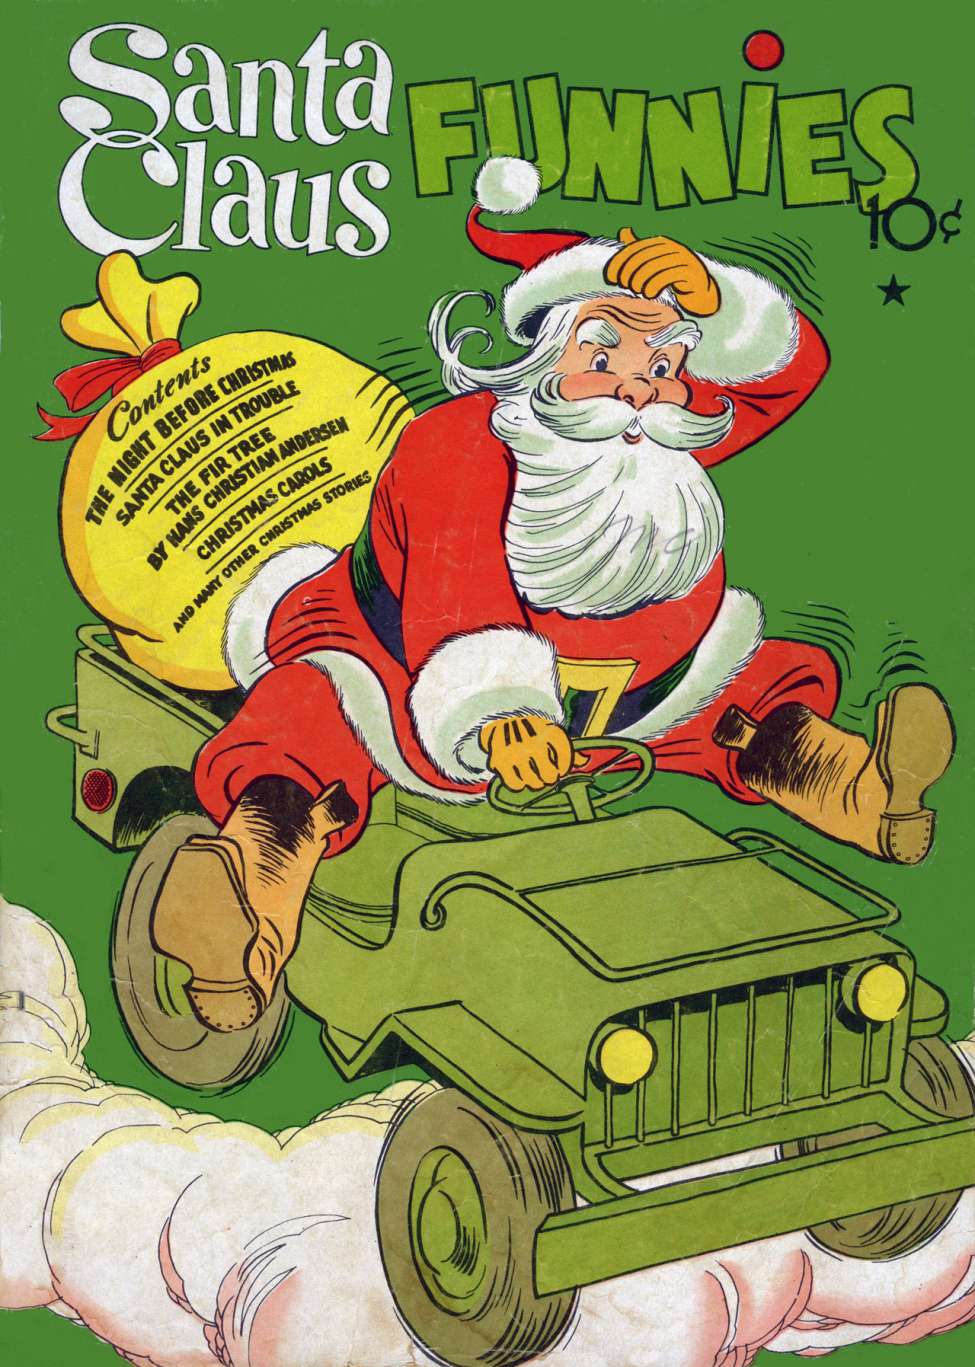 Santa Claus Funnies [1] (Dell Comics / Western Publishing)